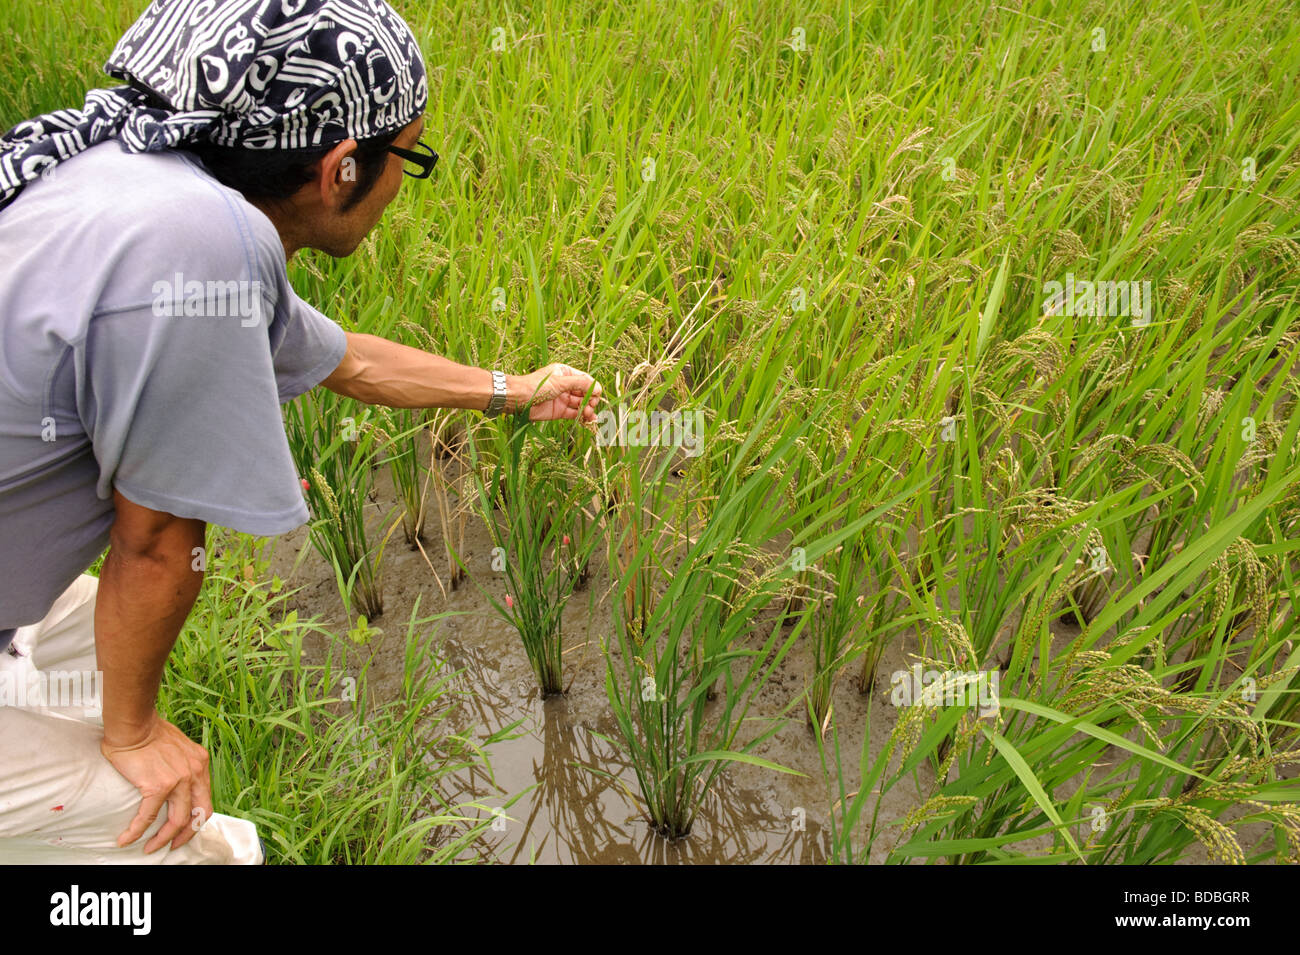 Staff Yosuke Watanuki looks over a rice paddy belonging to Browns Field farm, Isumi, Chiba Prefecture, Japan, August 8 2009. Stock Photo